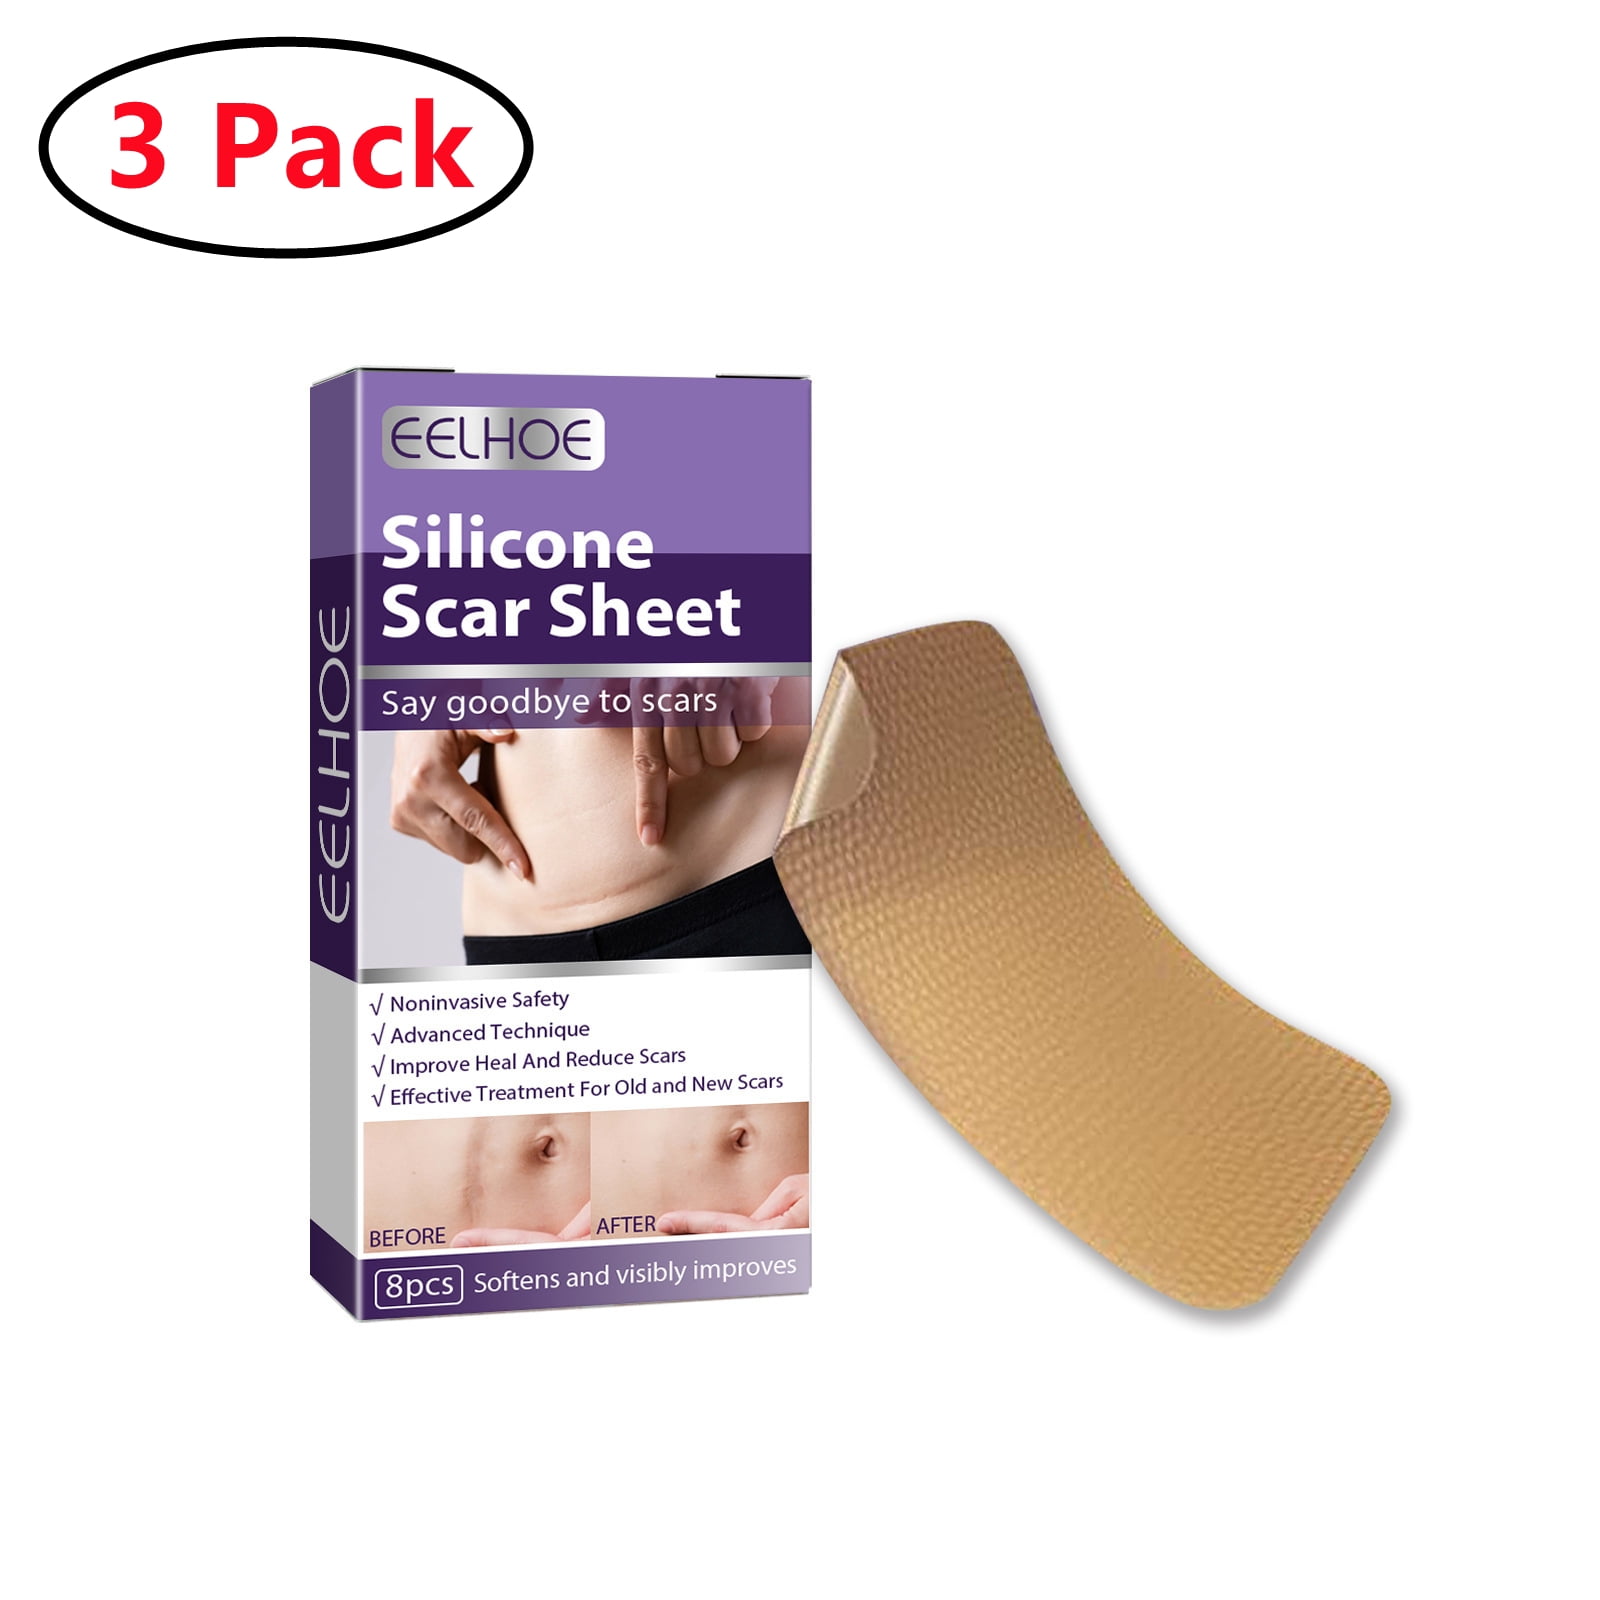 3pp® Gel Mate Self-Adhesive Scar Therapy Sheet : Silicone gel sheet